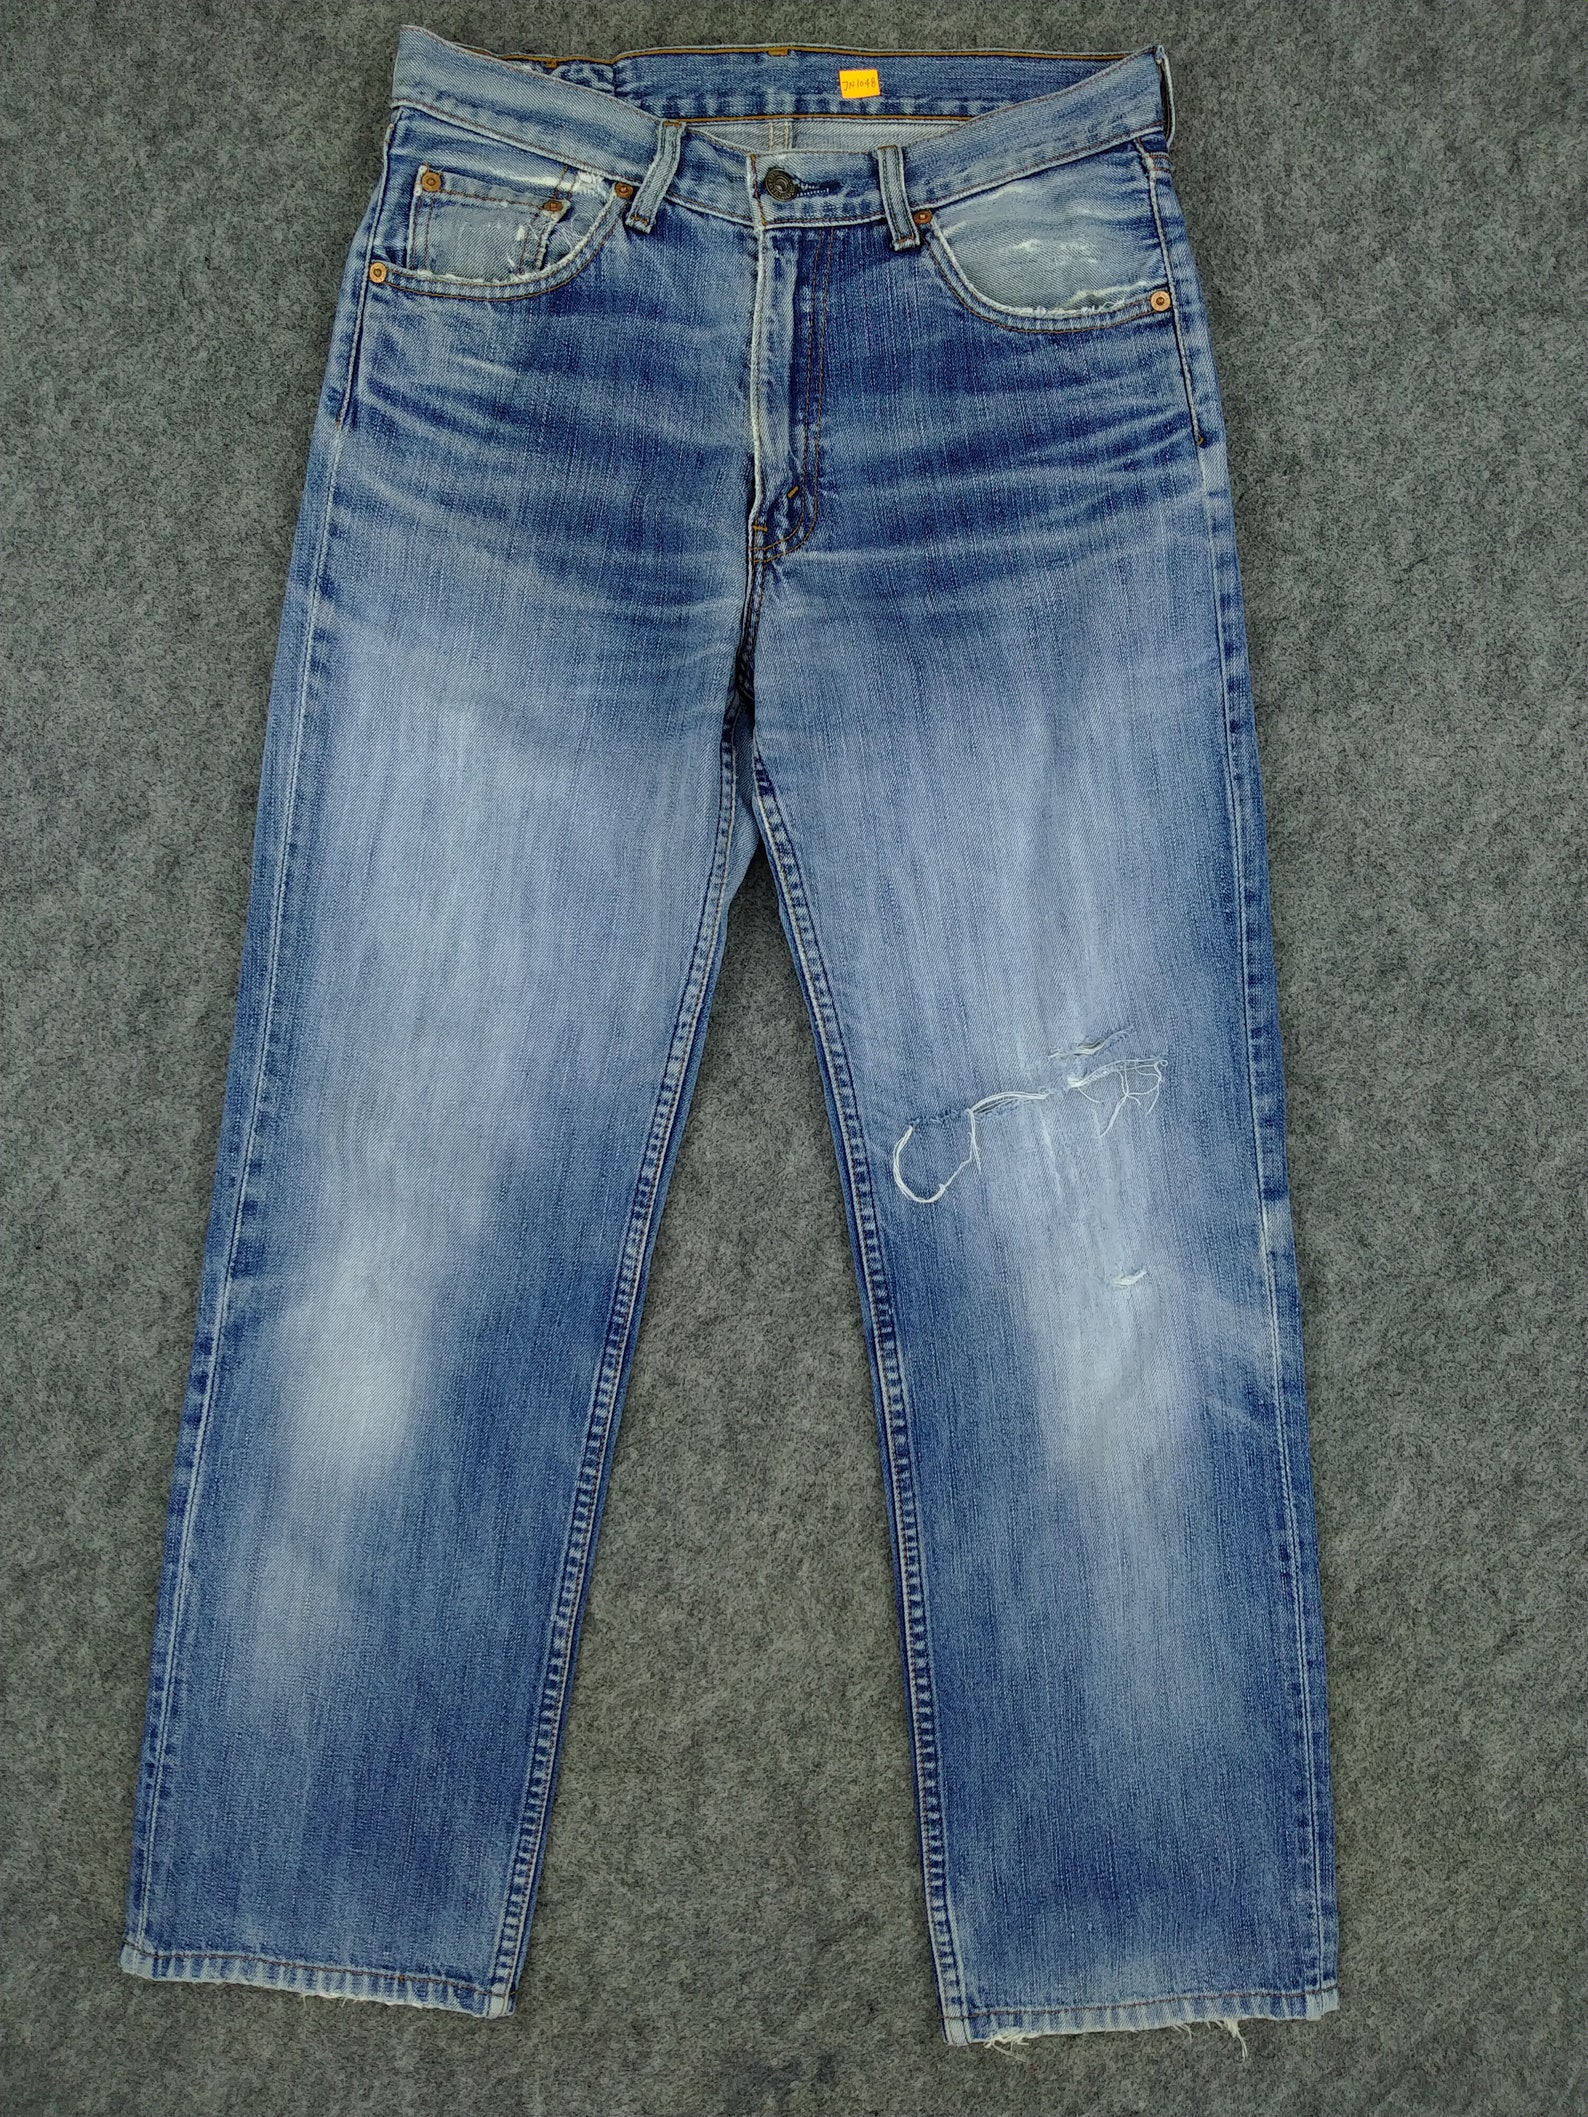 30x28 Vintage Levi's 502 Jeans Light Wash Denim Red Tab Faded Denim ...